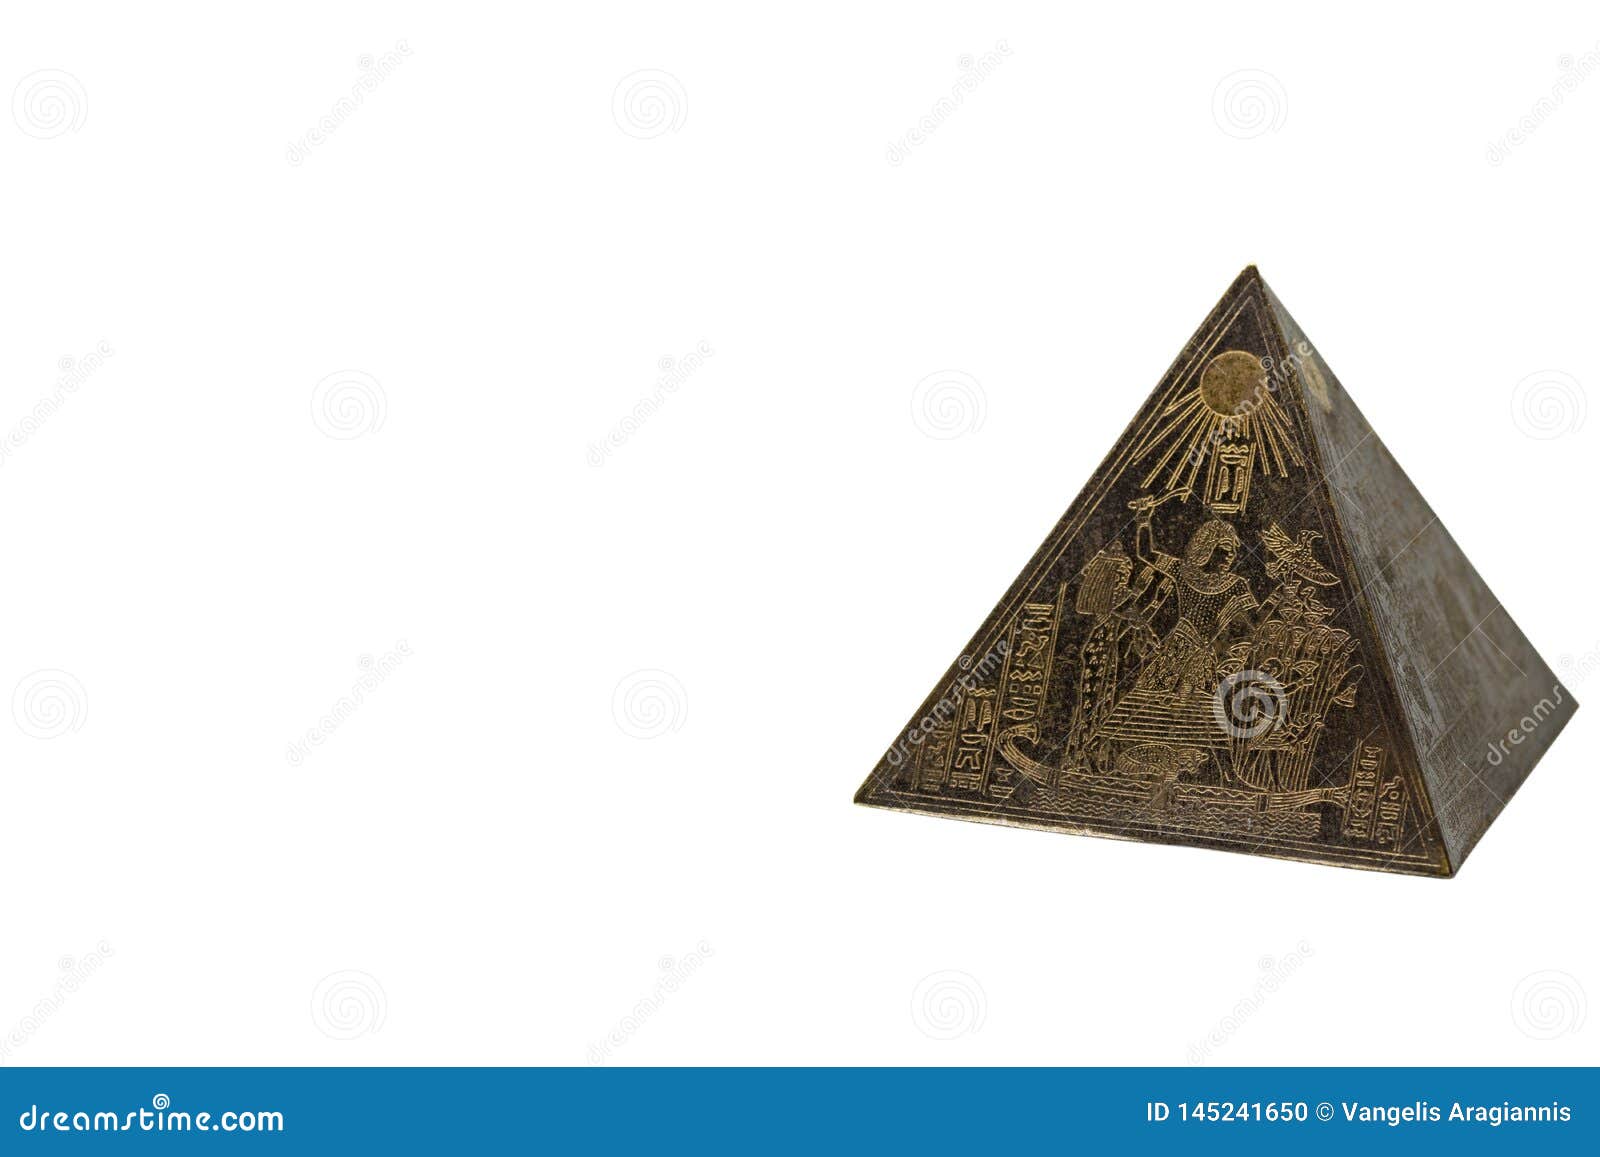 Figurine of Bronze Egyptian Pyramid Stock Photo - Image of ...